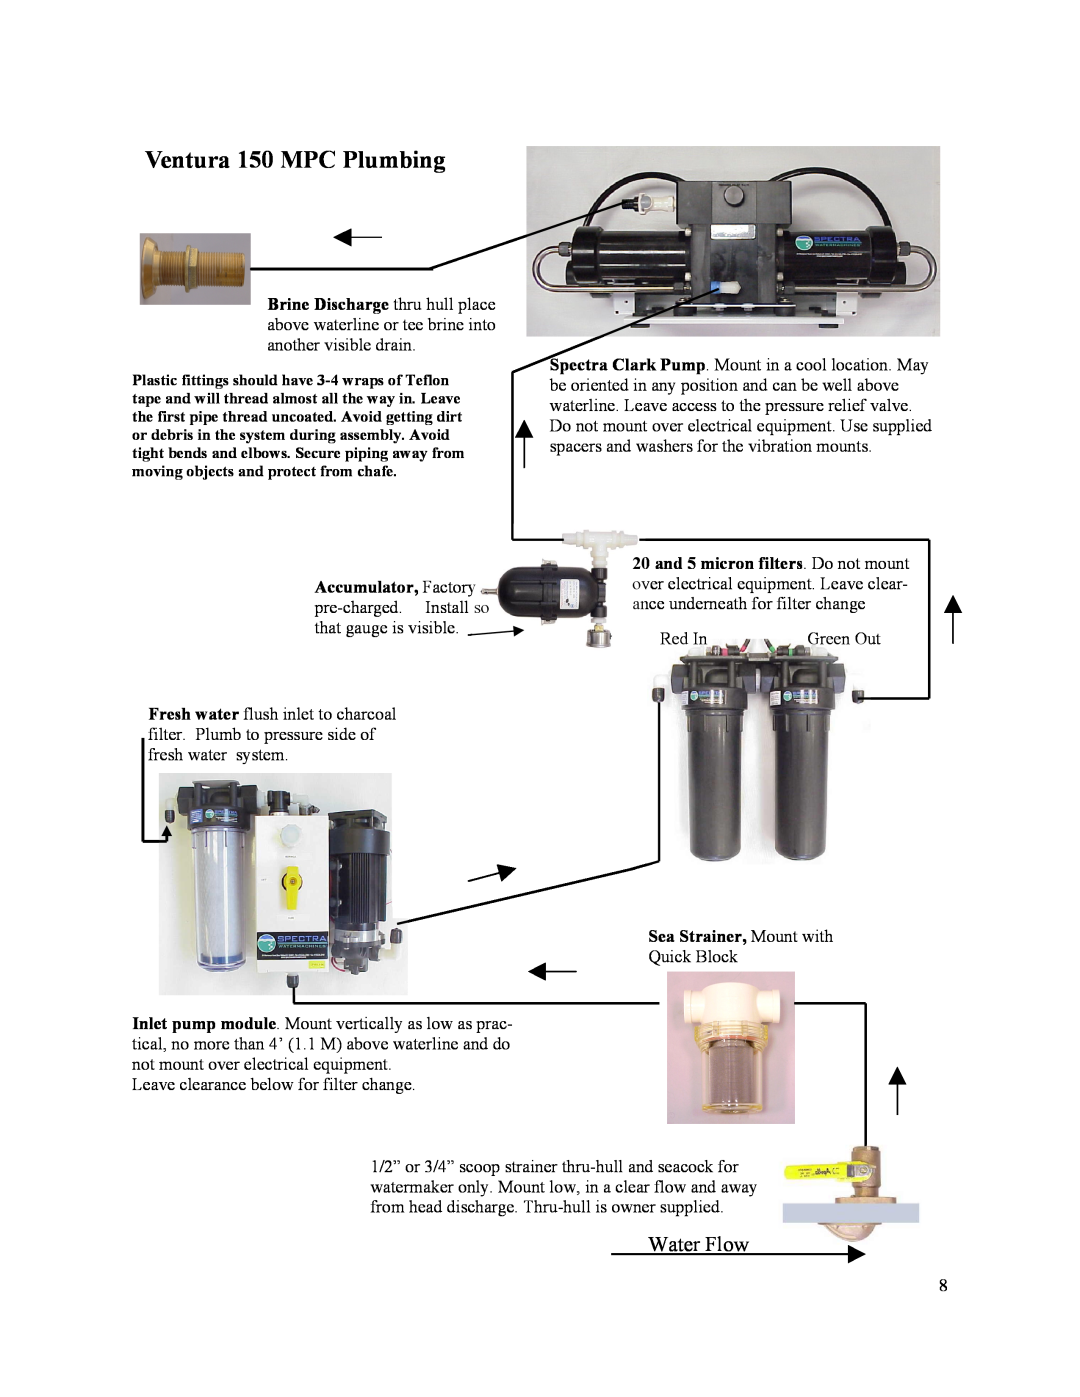 Spectra Watermakers MPC-5000 owner manual Ventura 150 MPC Plumbing, Water Flow 